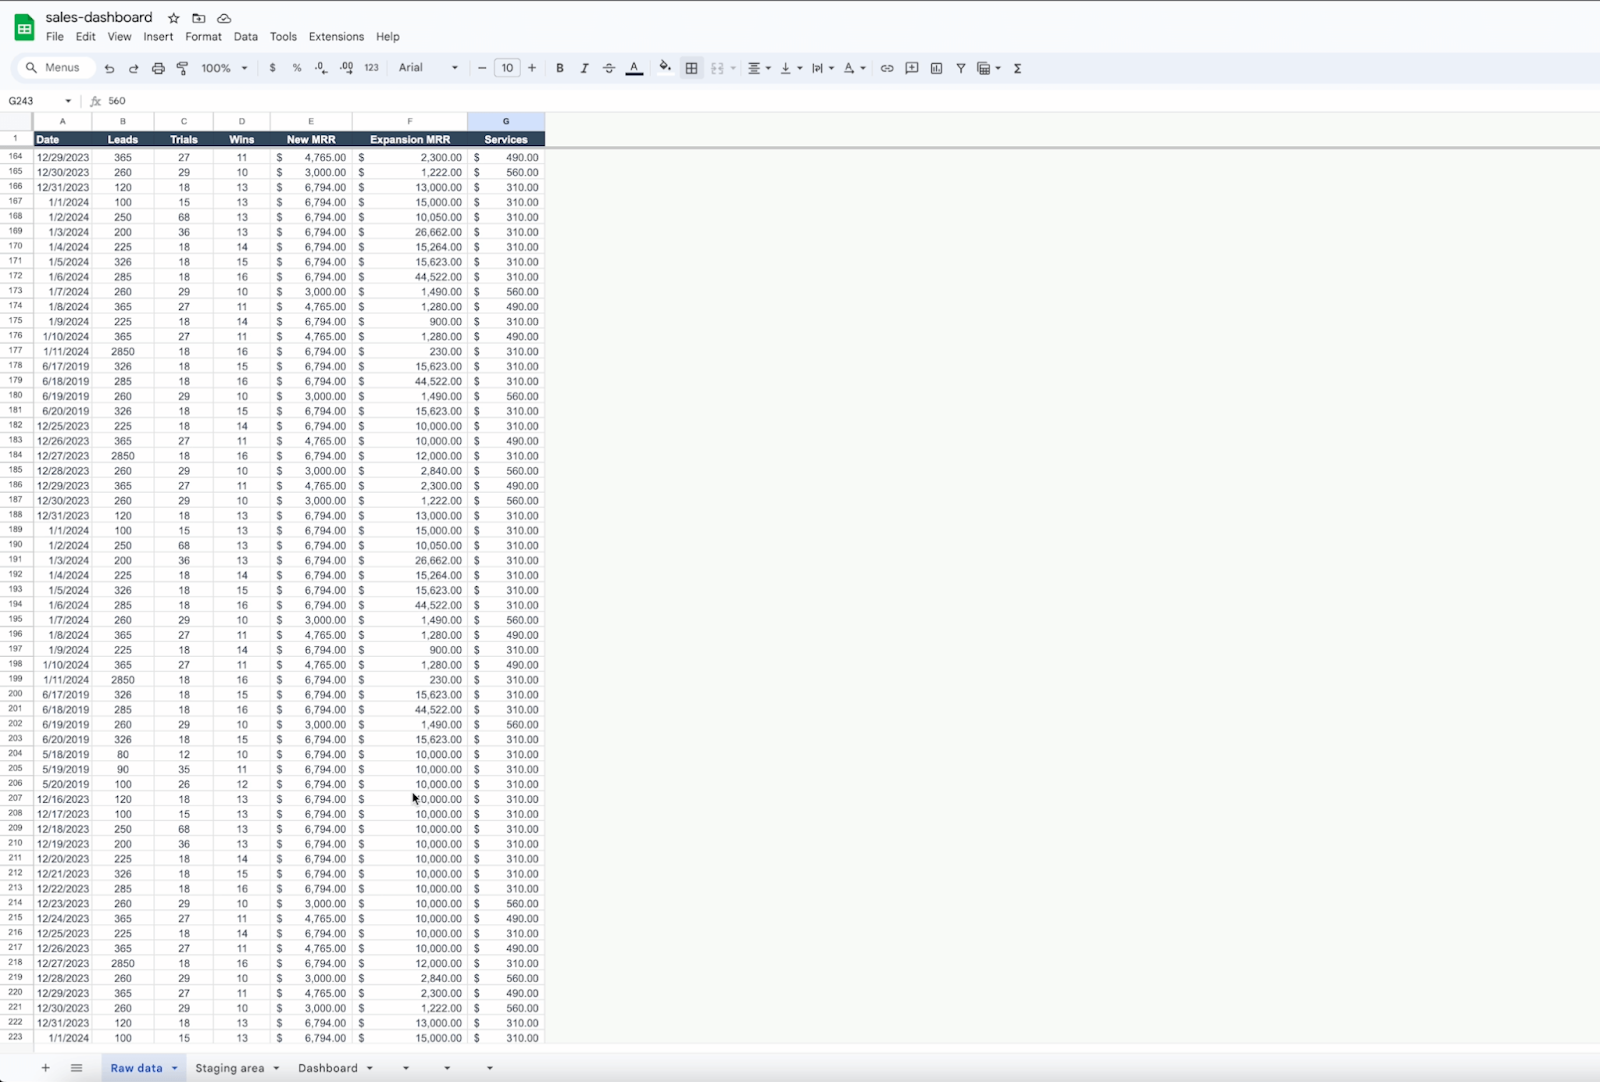 Screenshot of raw data in a spreadsheet.